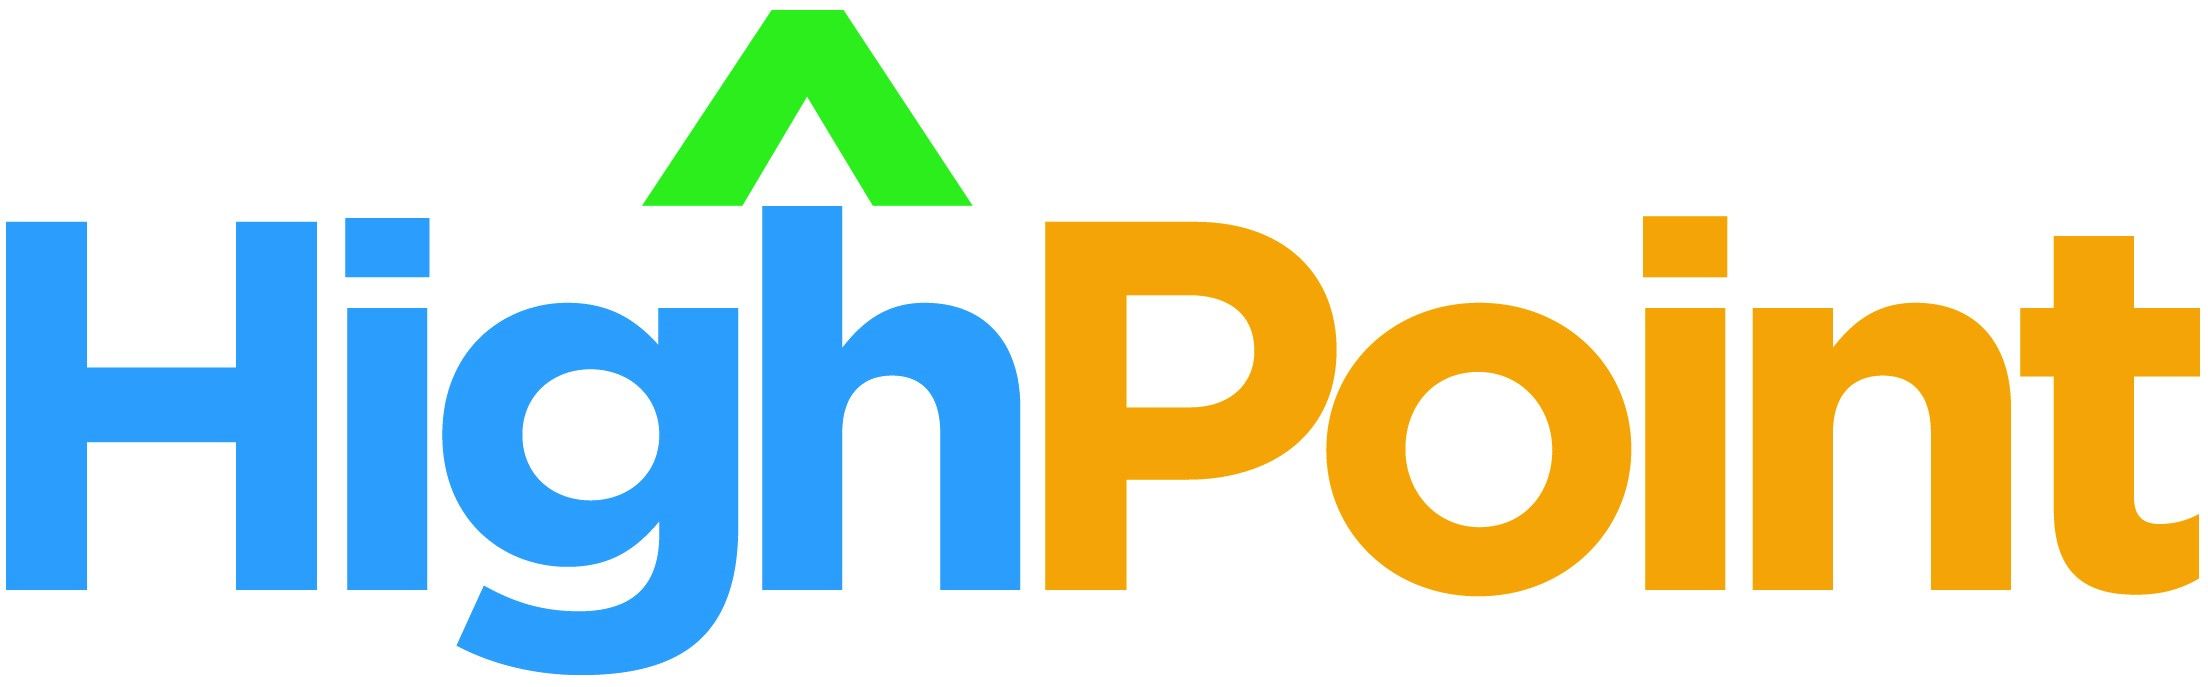 HighPoint Digital Inc. Logo